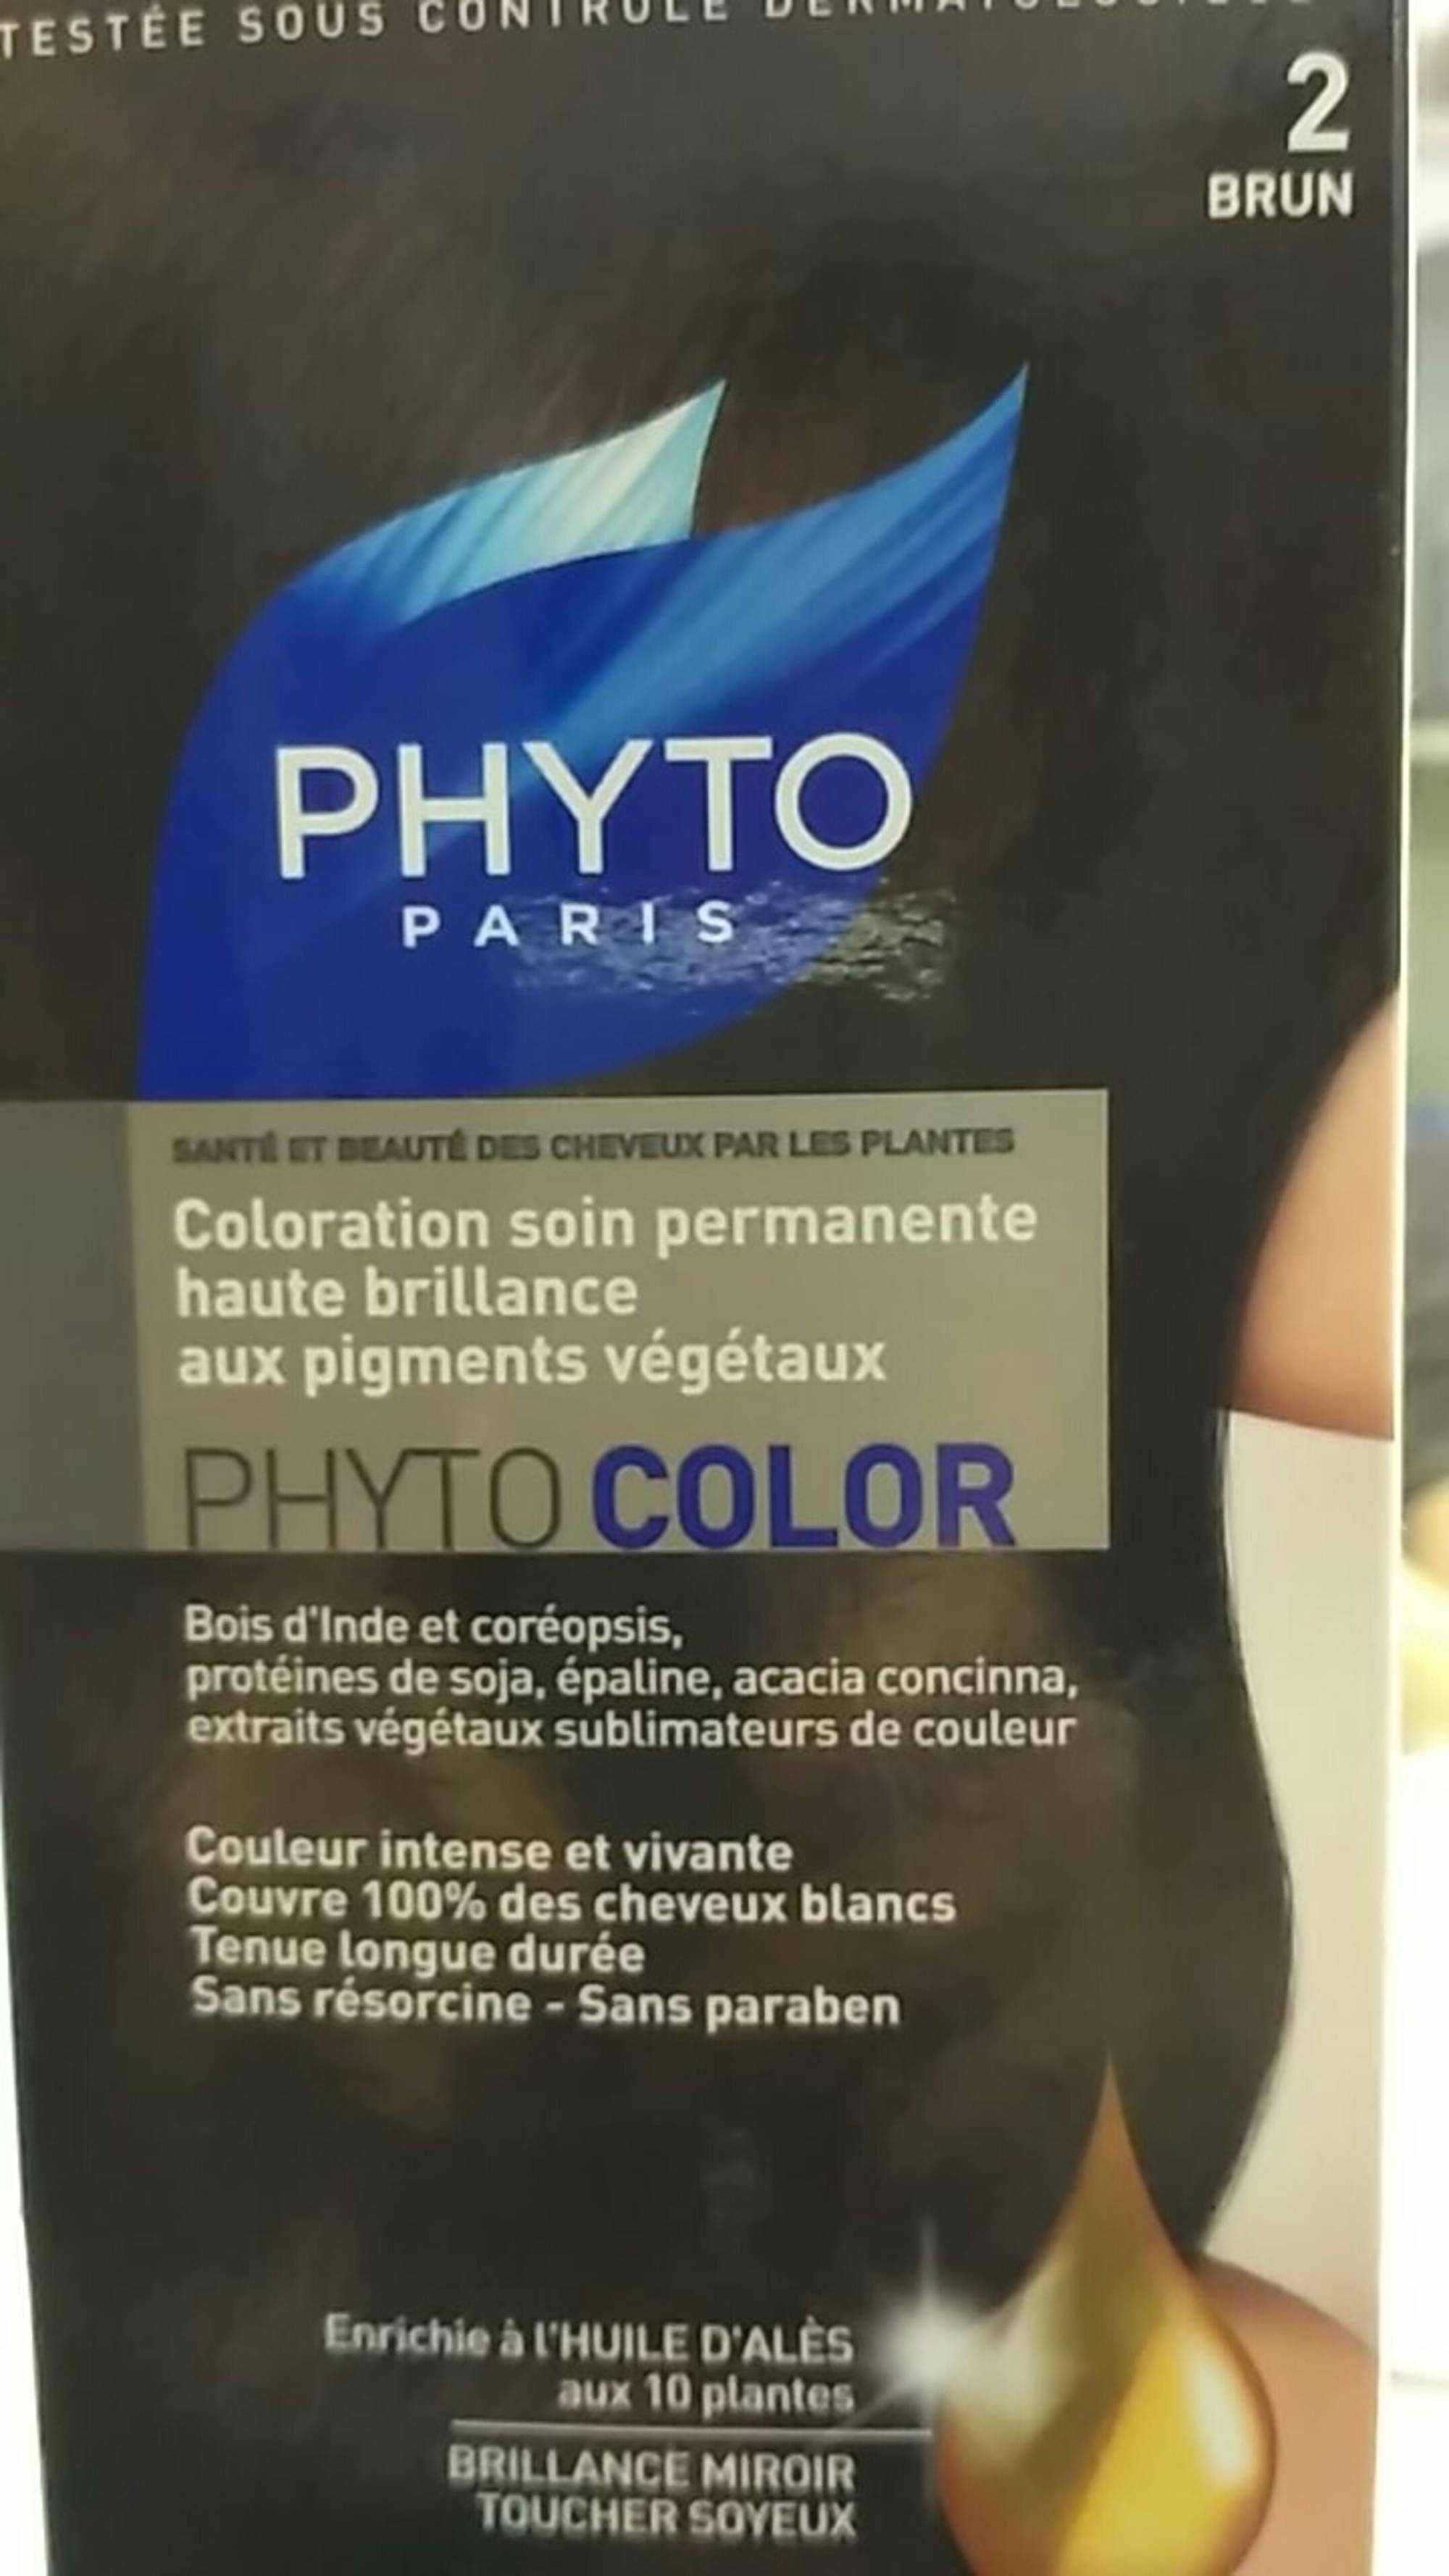 PHYTO - Phytocolor - Coloration soin permanente haute brillance 2 Brun